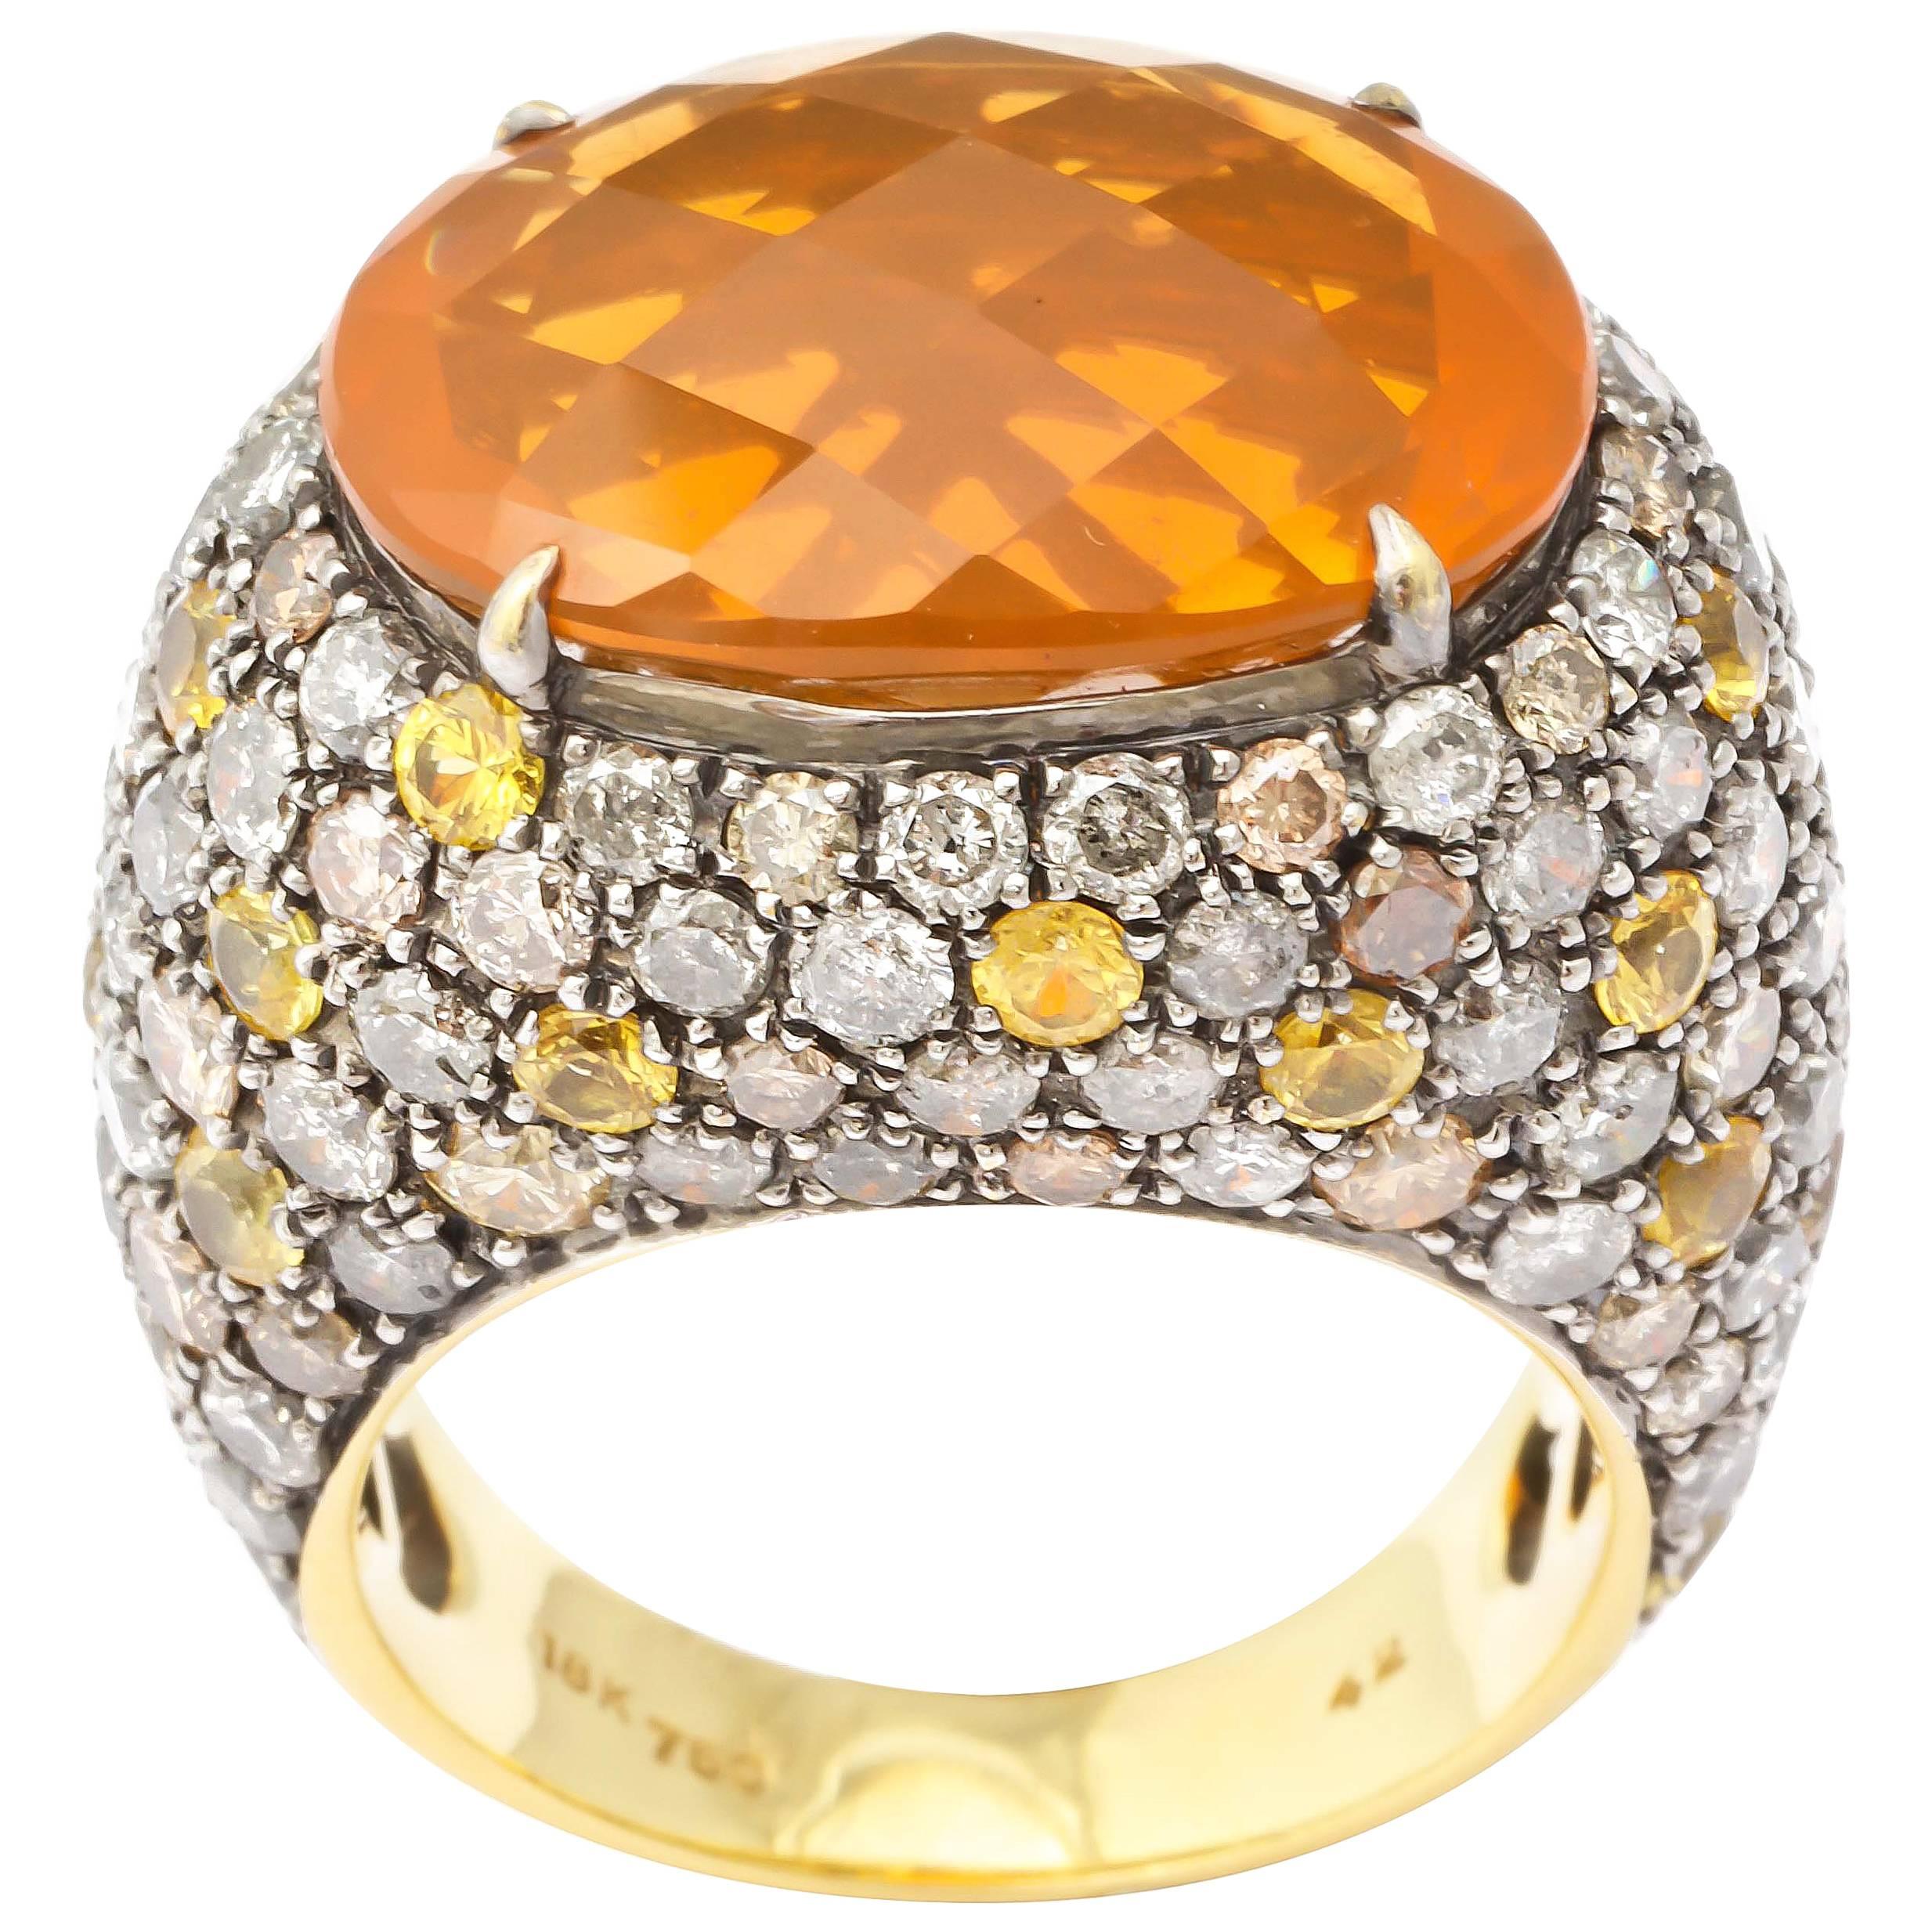  Fire Opal Gold Ring